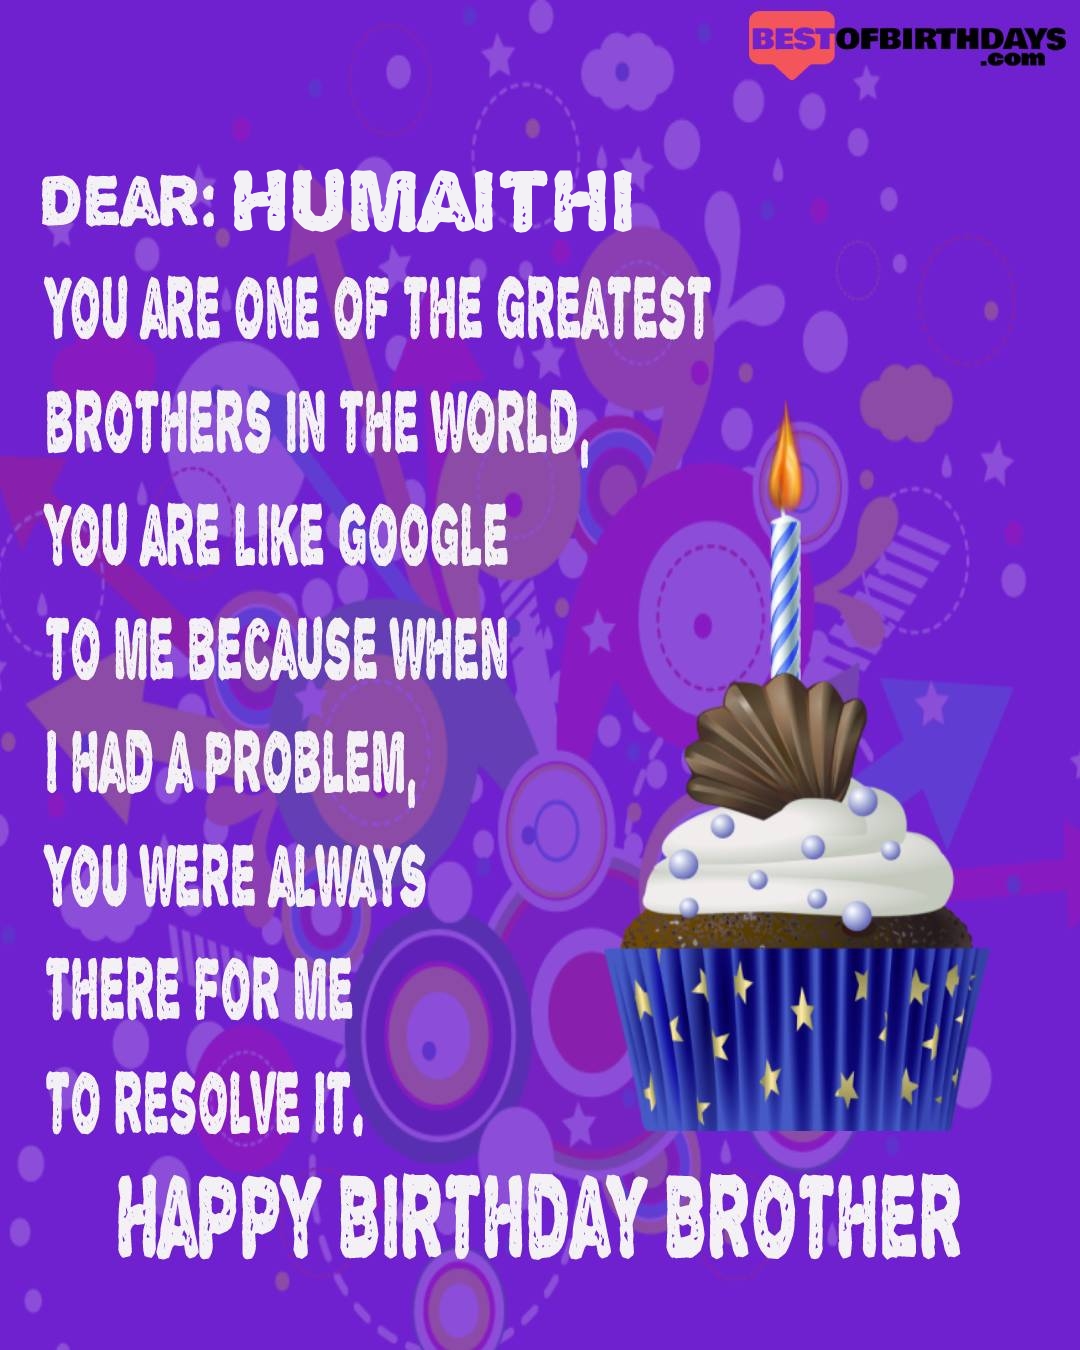 Happy birthday humaithi bhai brother bro